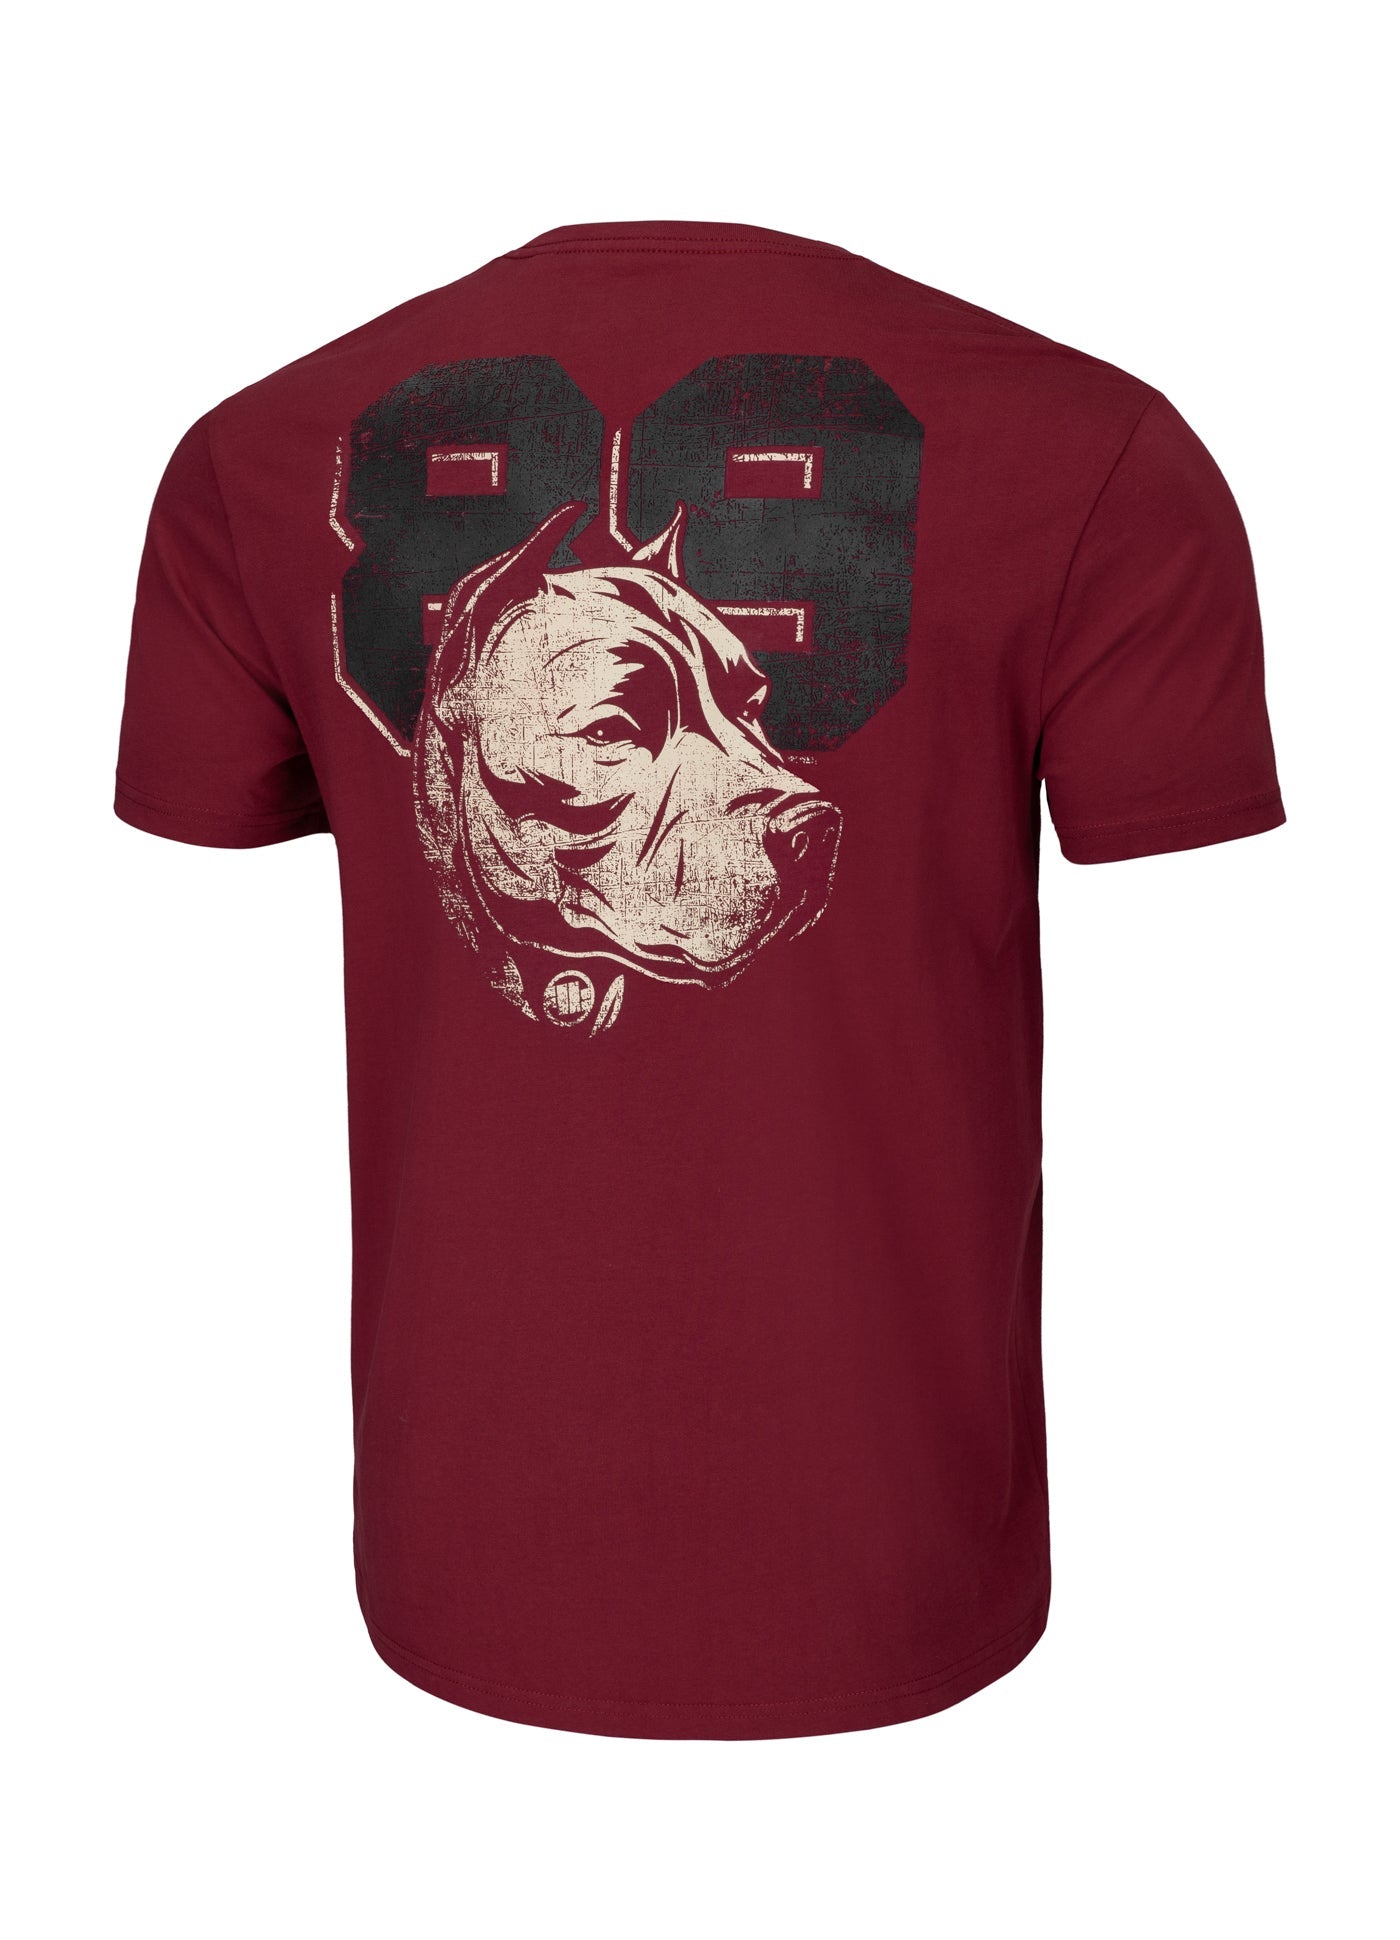 DOG 89 Burgundy T-shirt